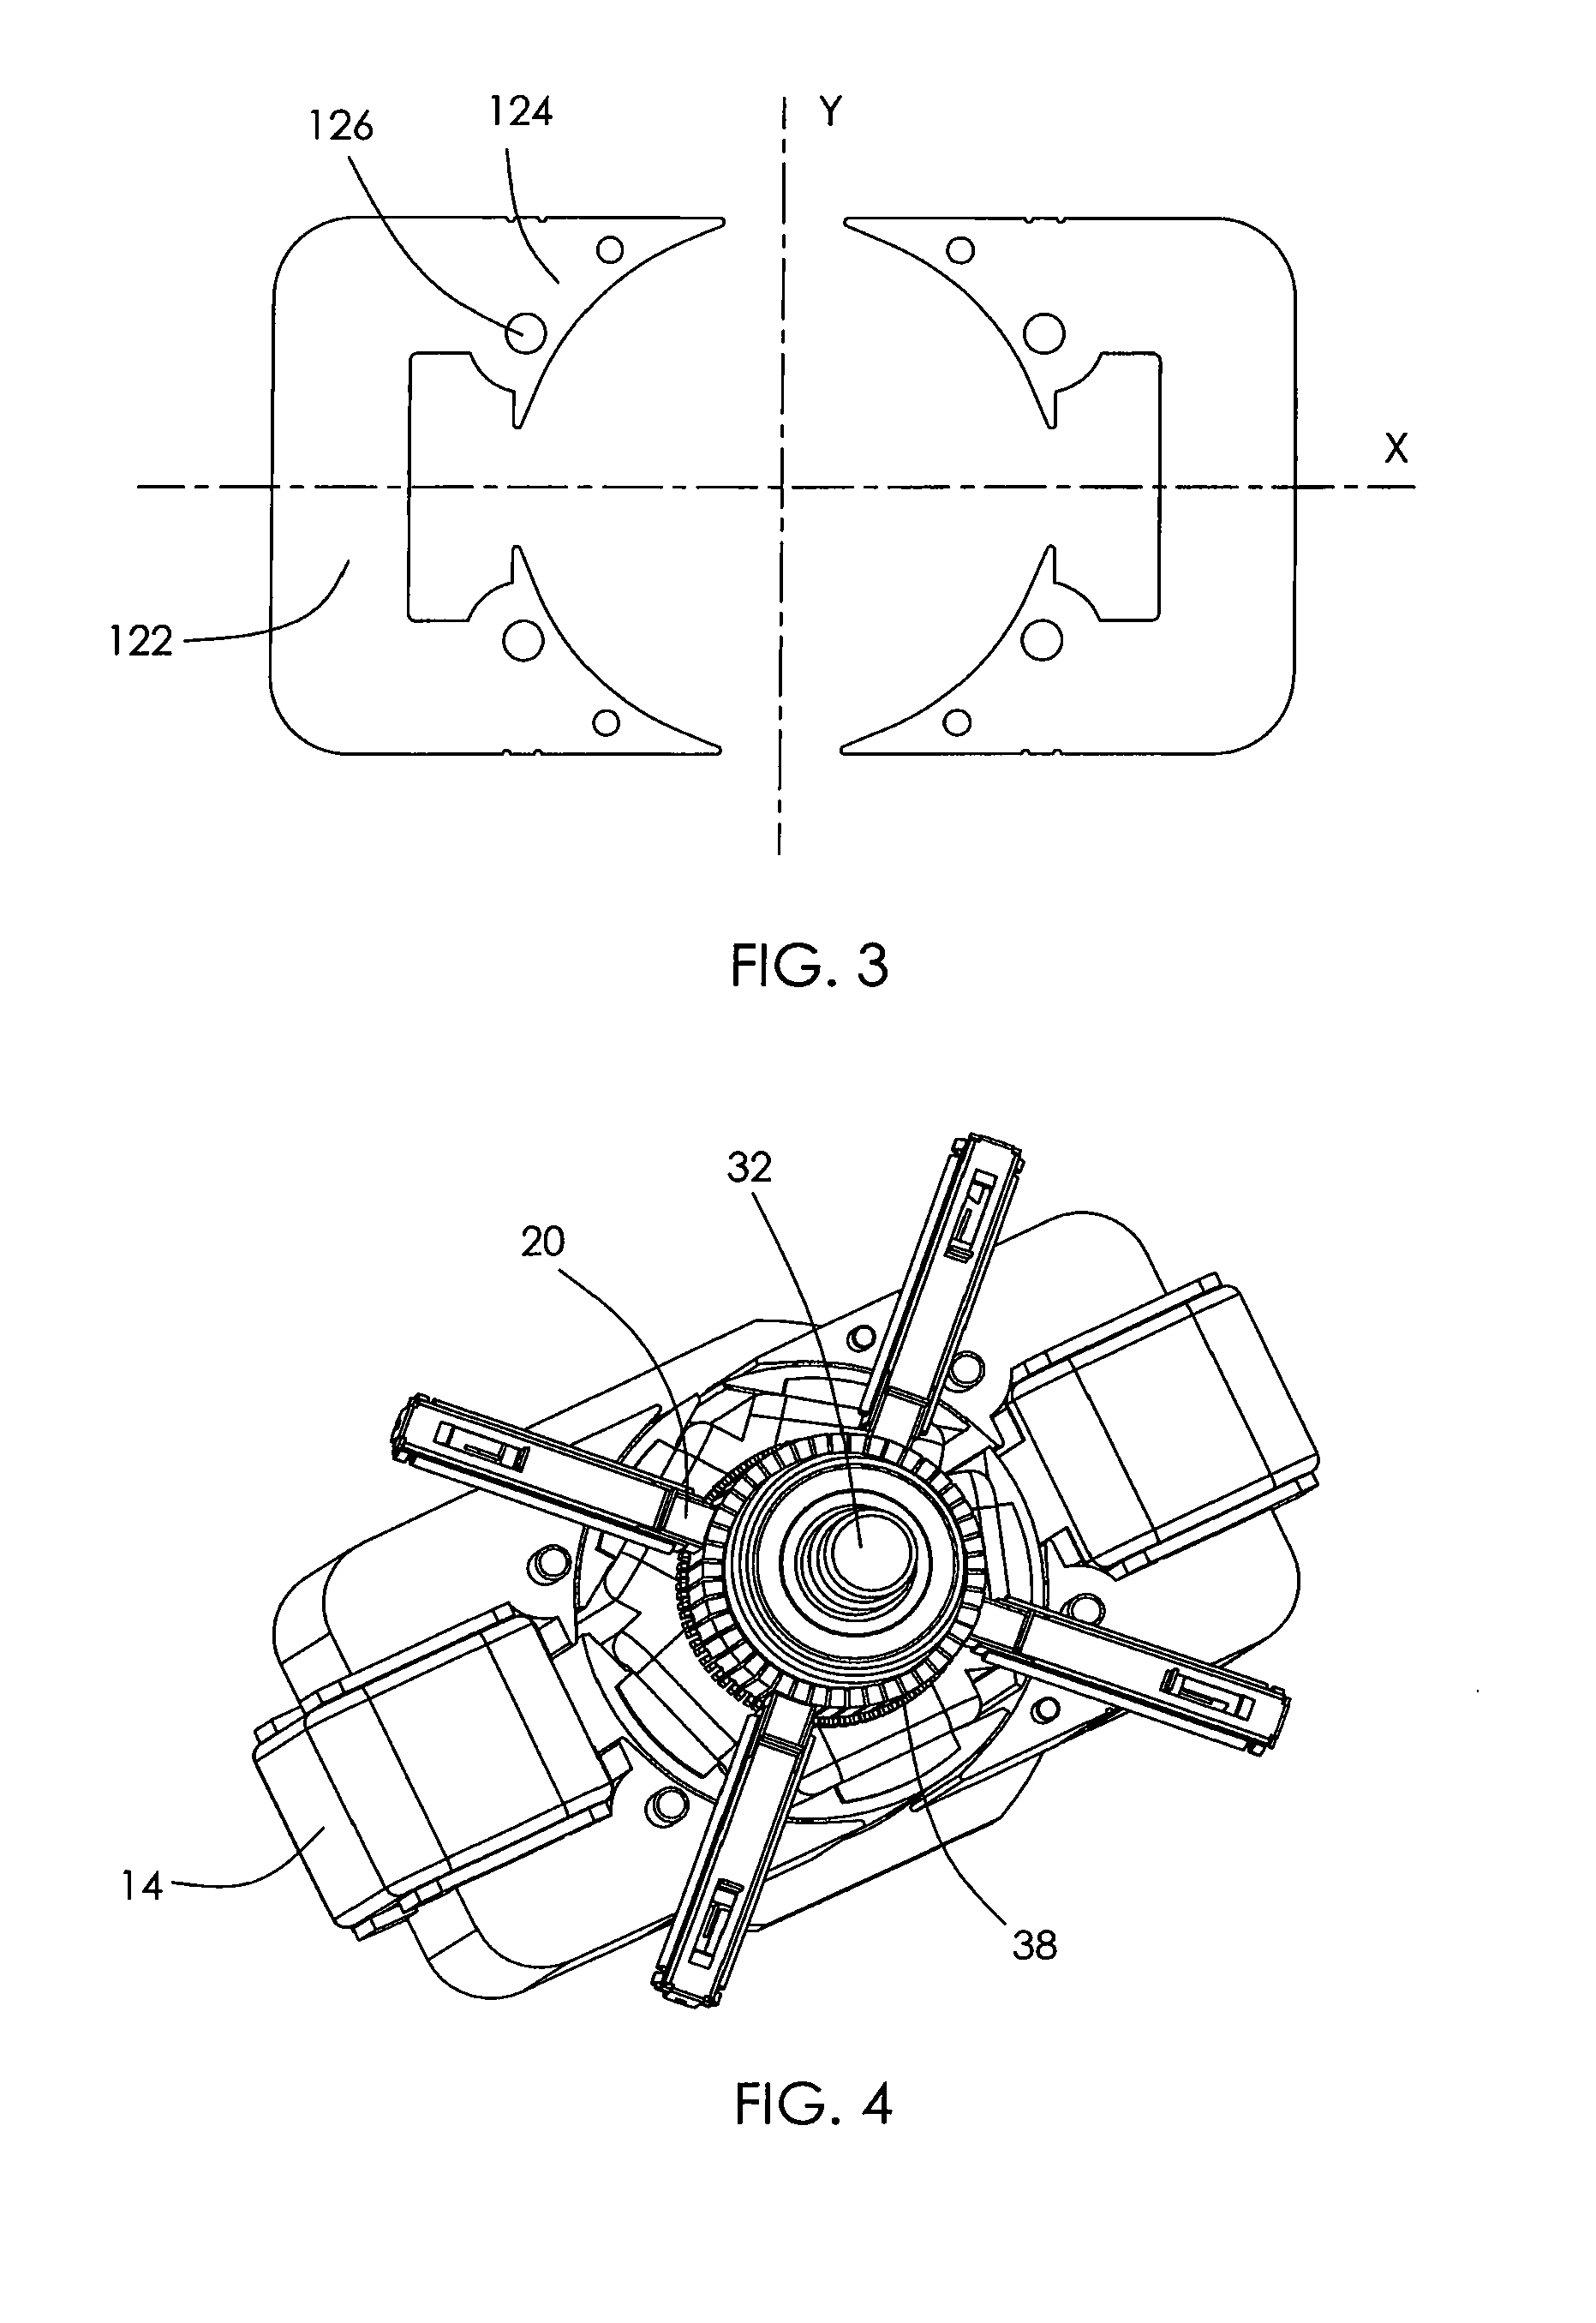 Universal motor